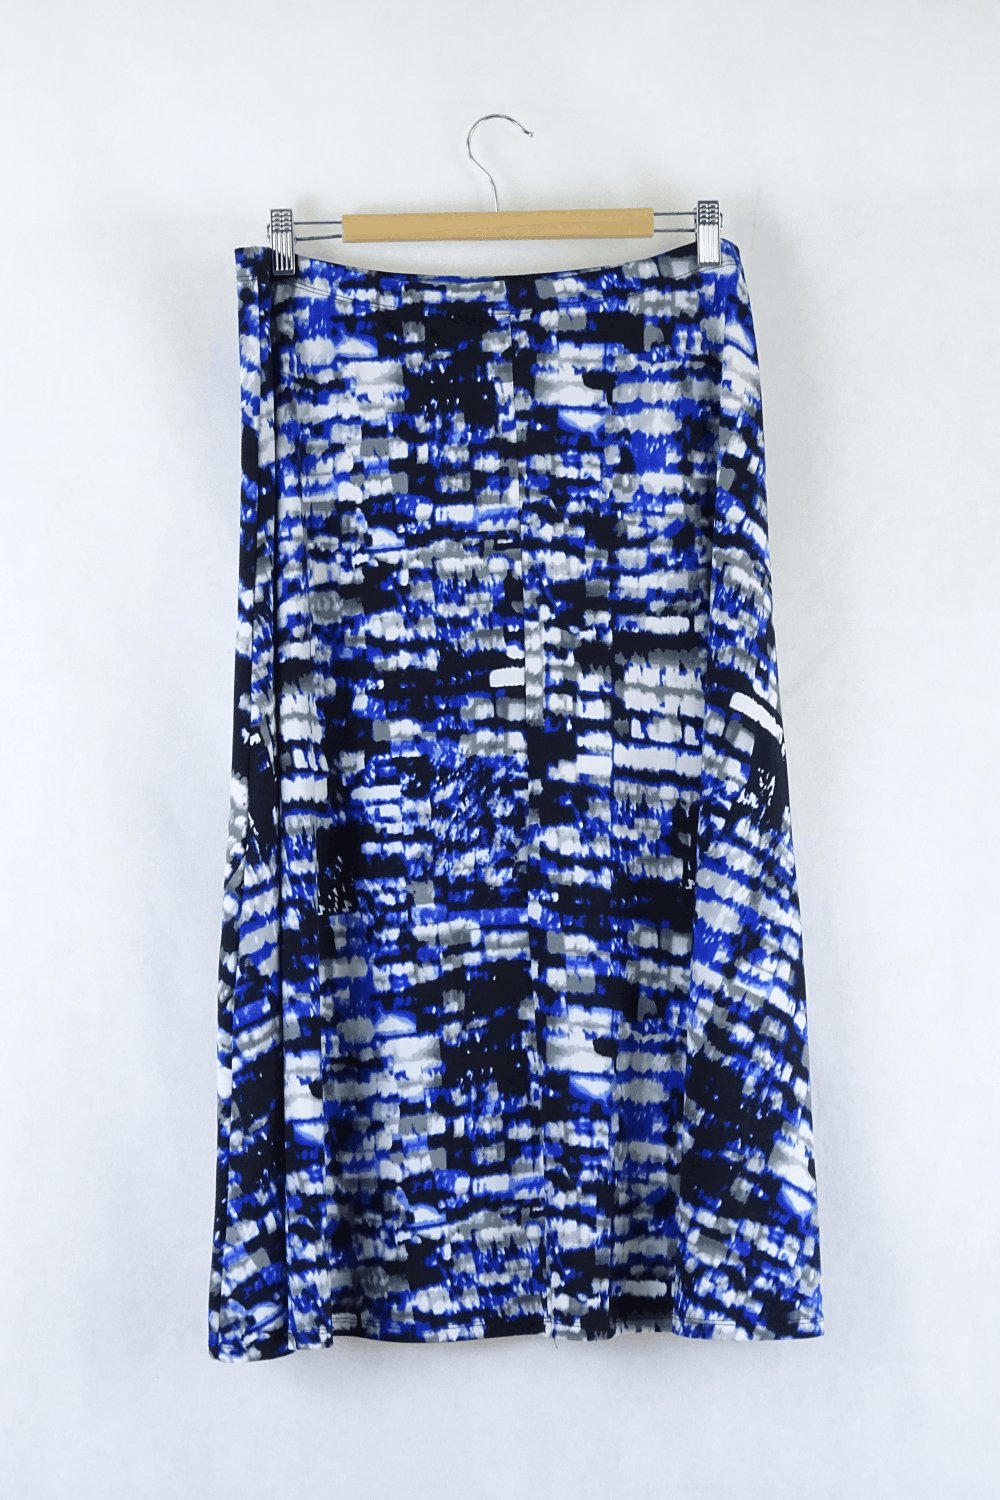 Noni B Black, White And Blue Printed Skirt L